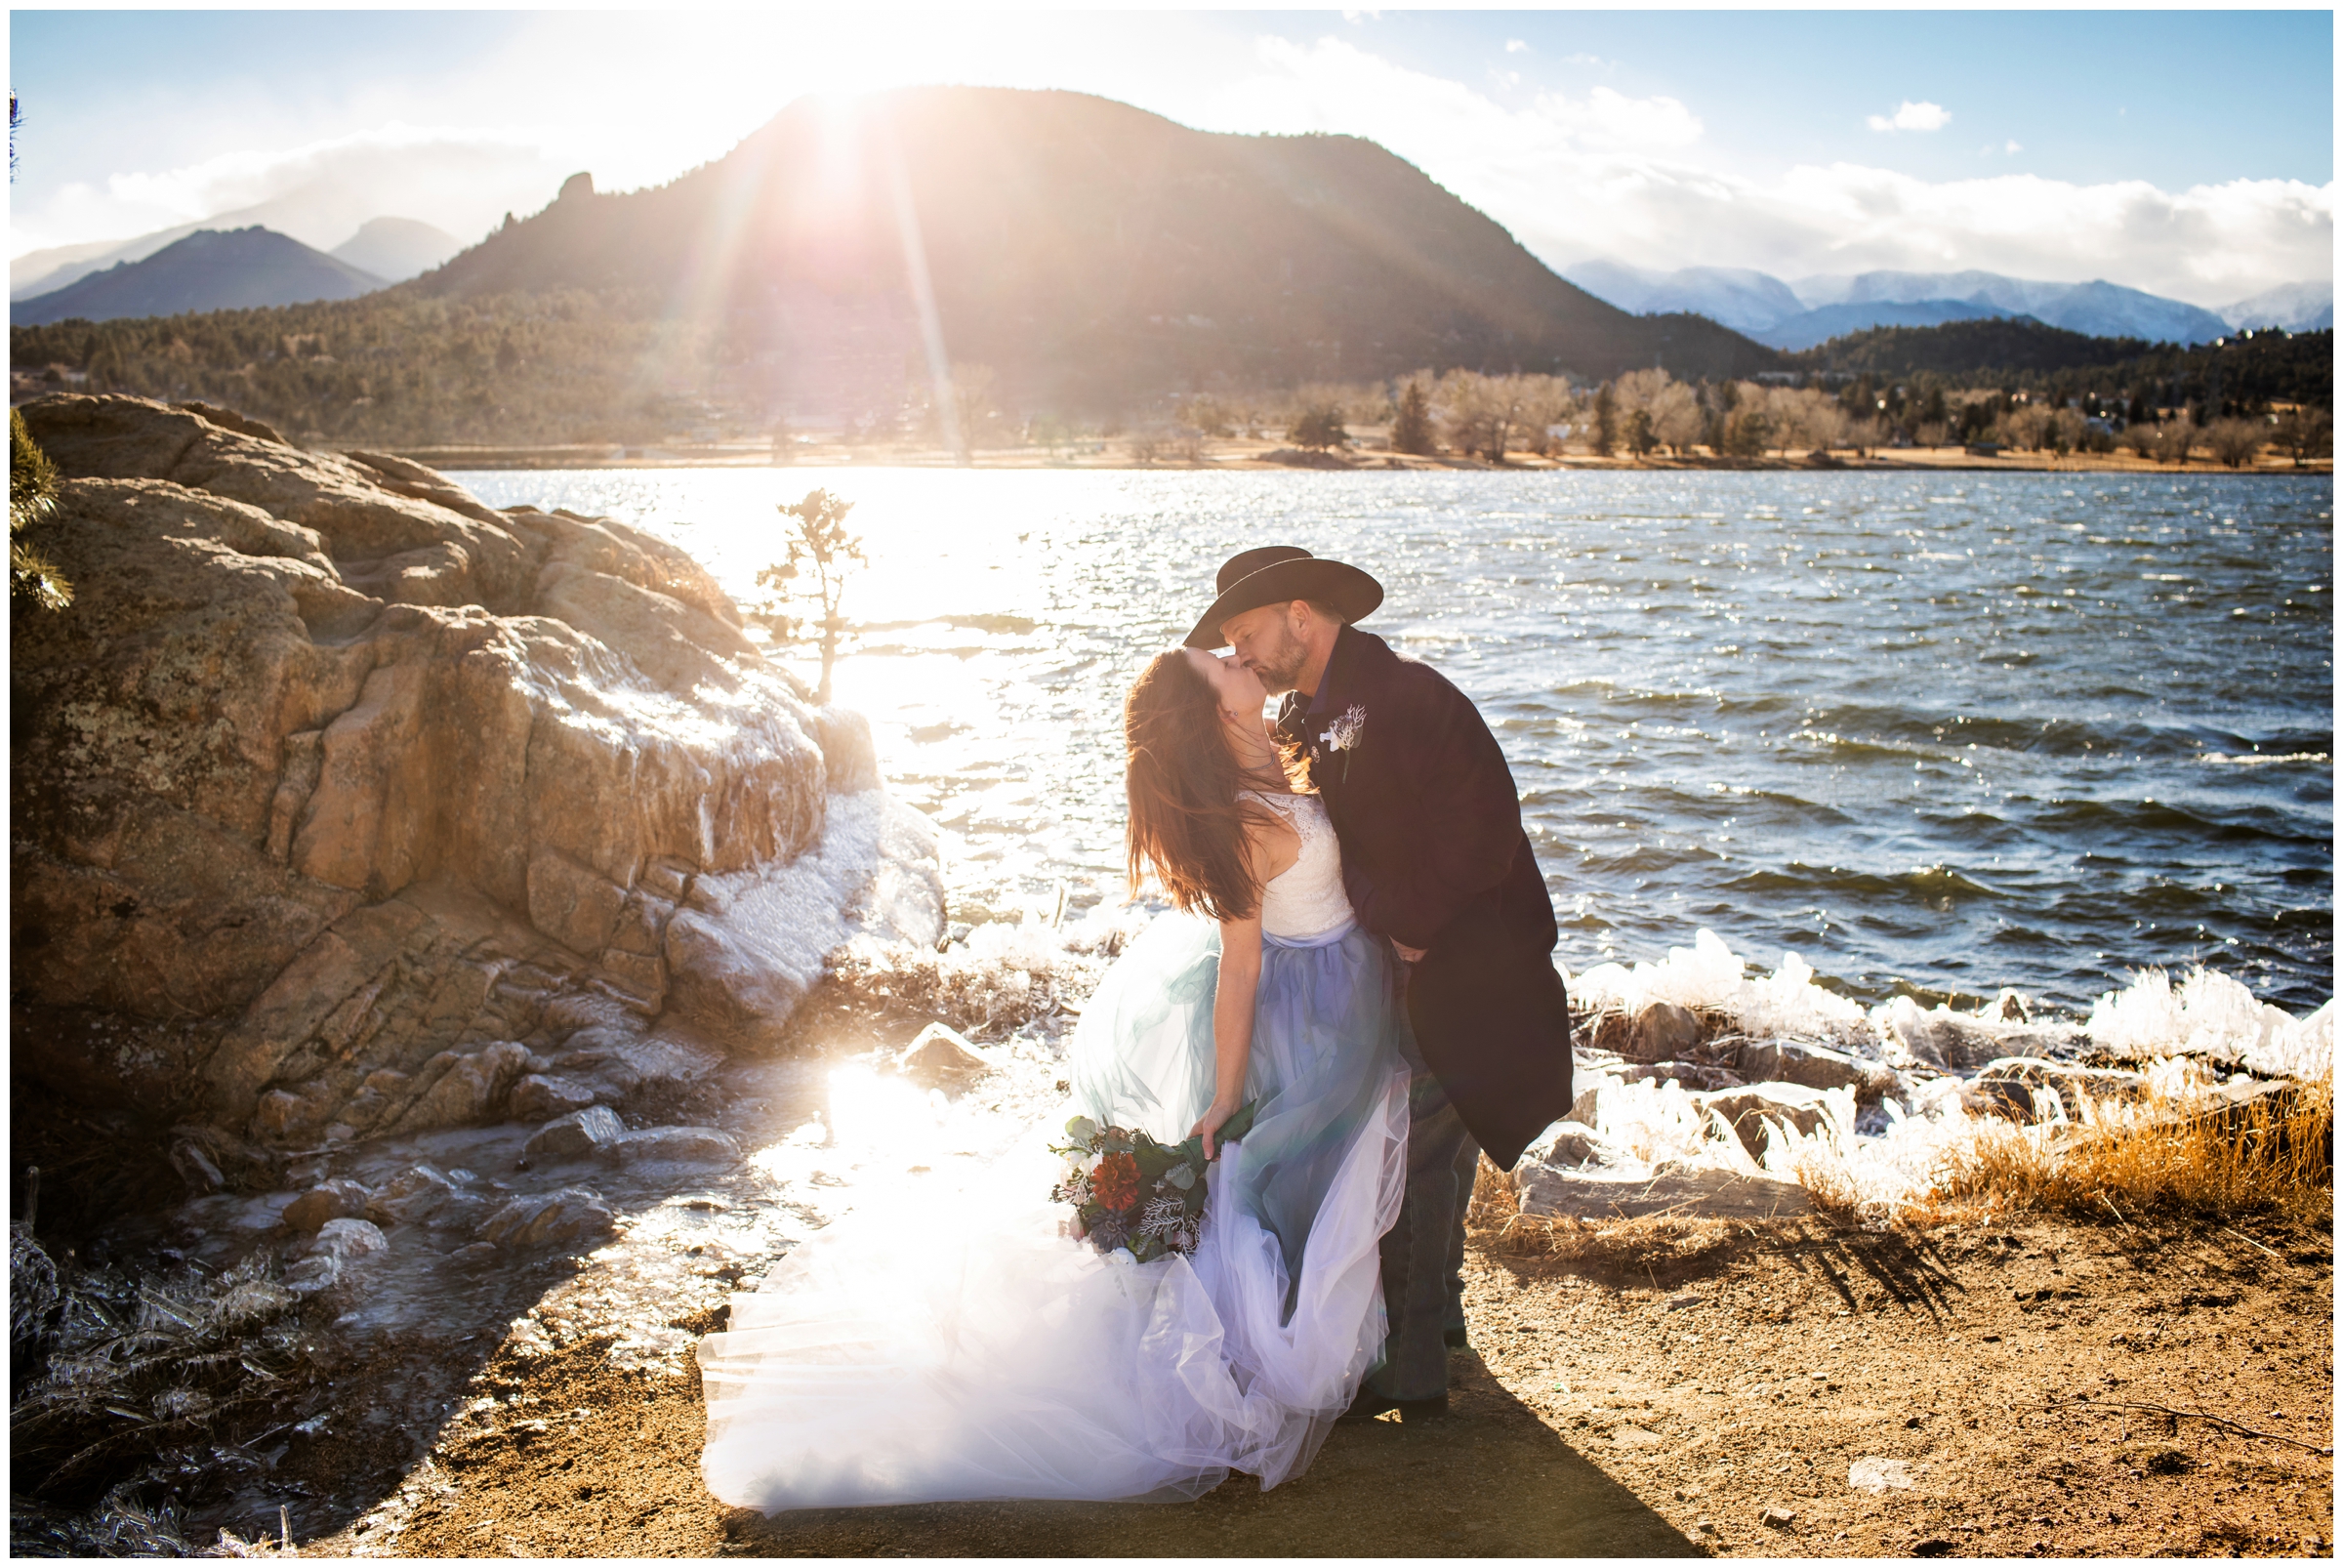 Estes Park Resort wedding photos during winter by Colorado elopement photographer Plum Pretty Photography